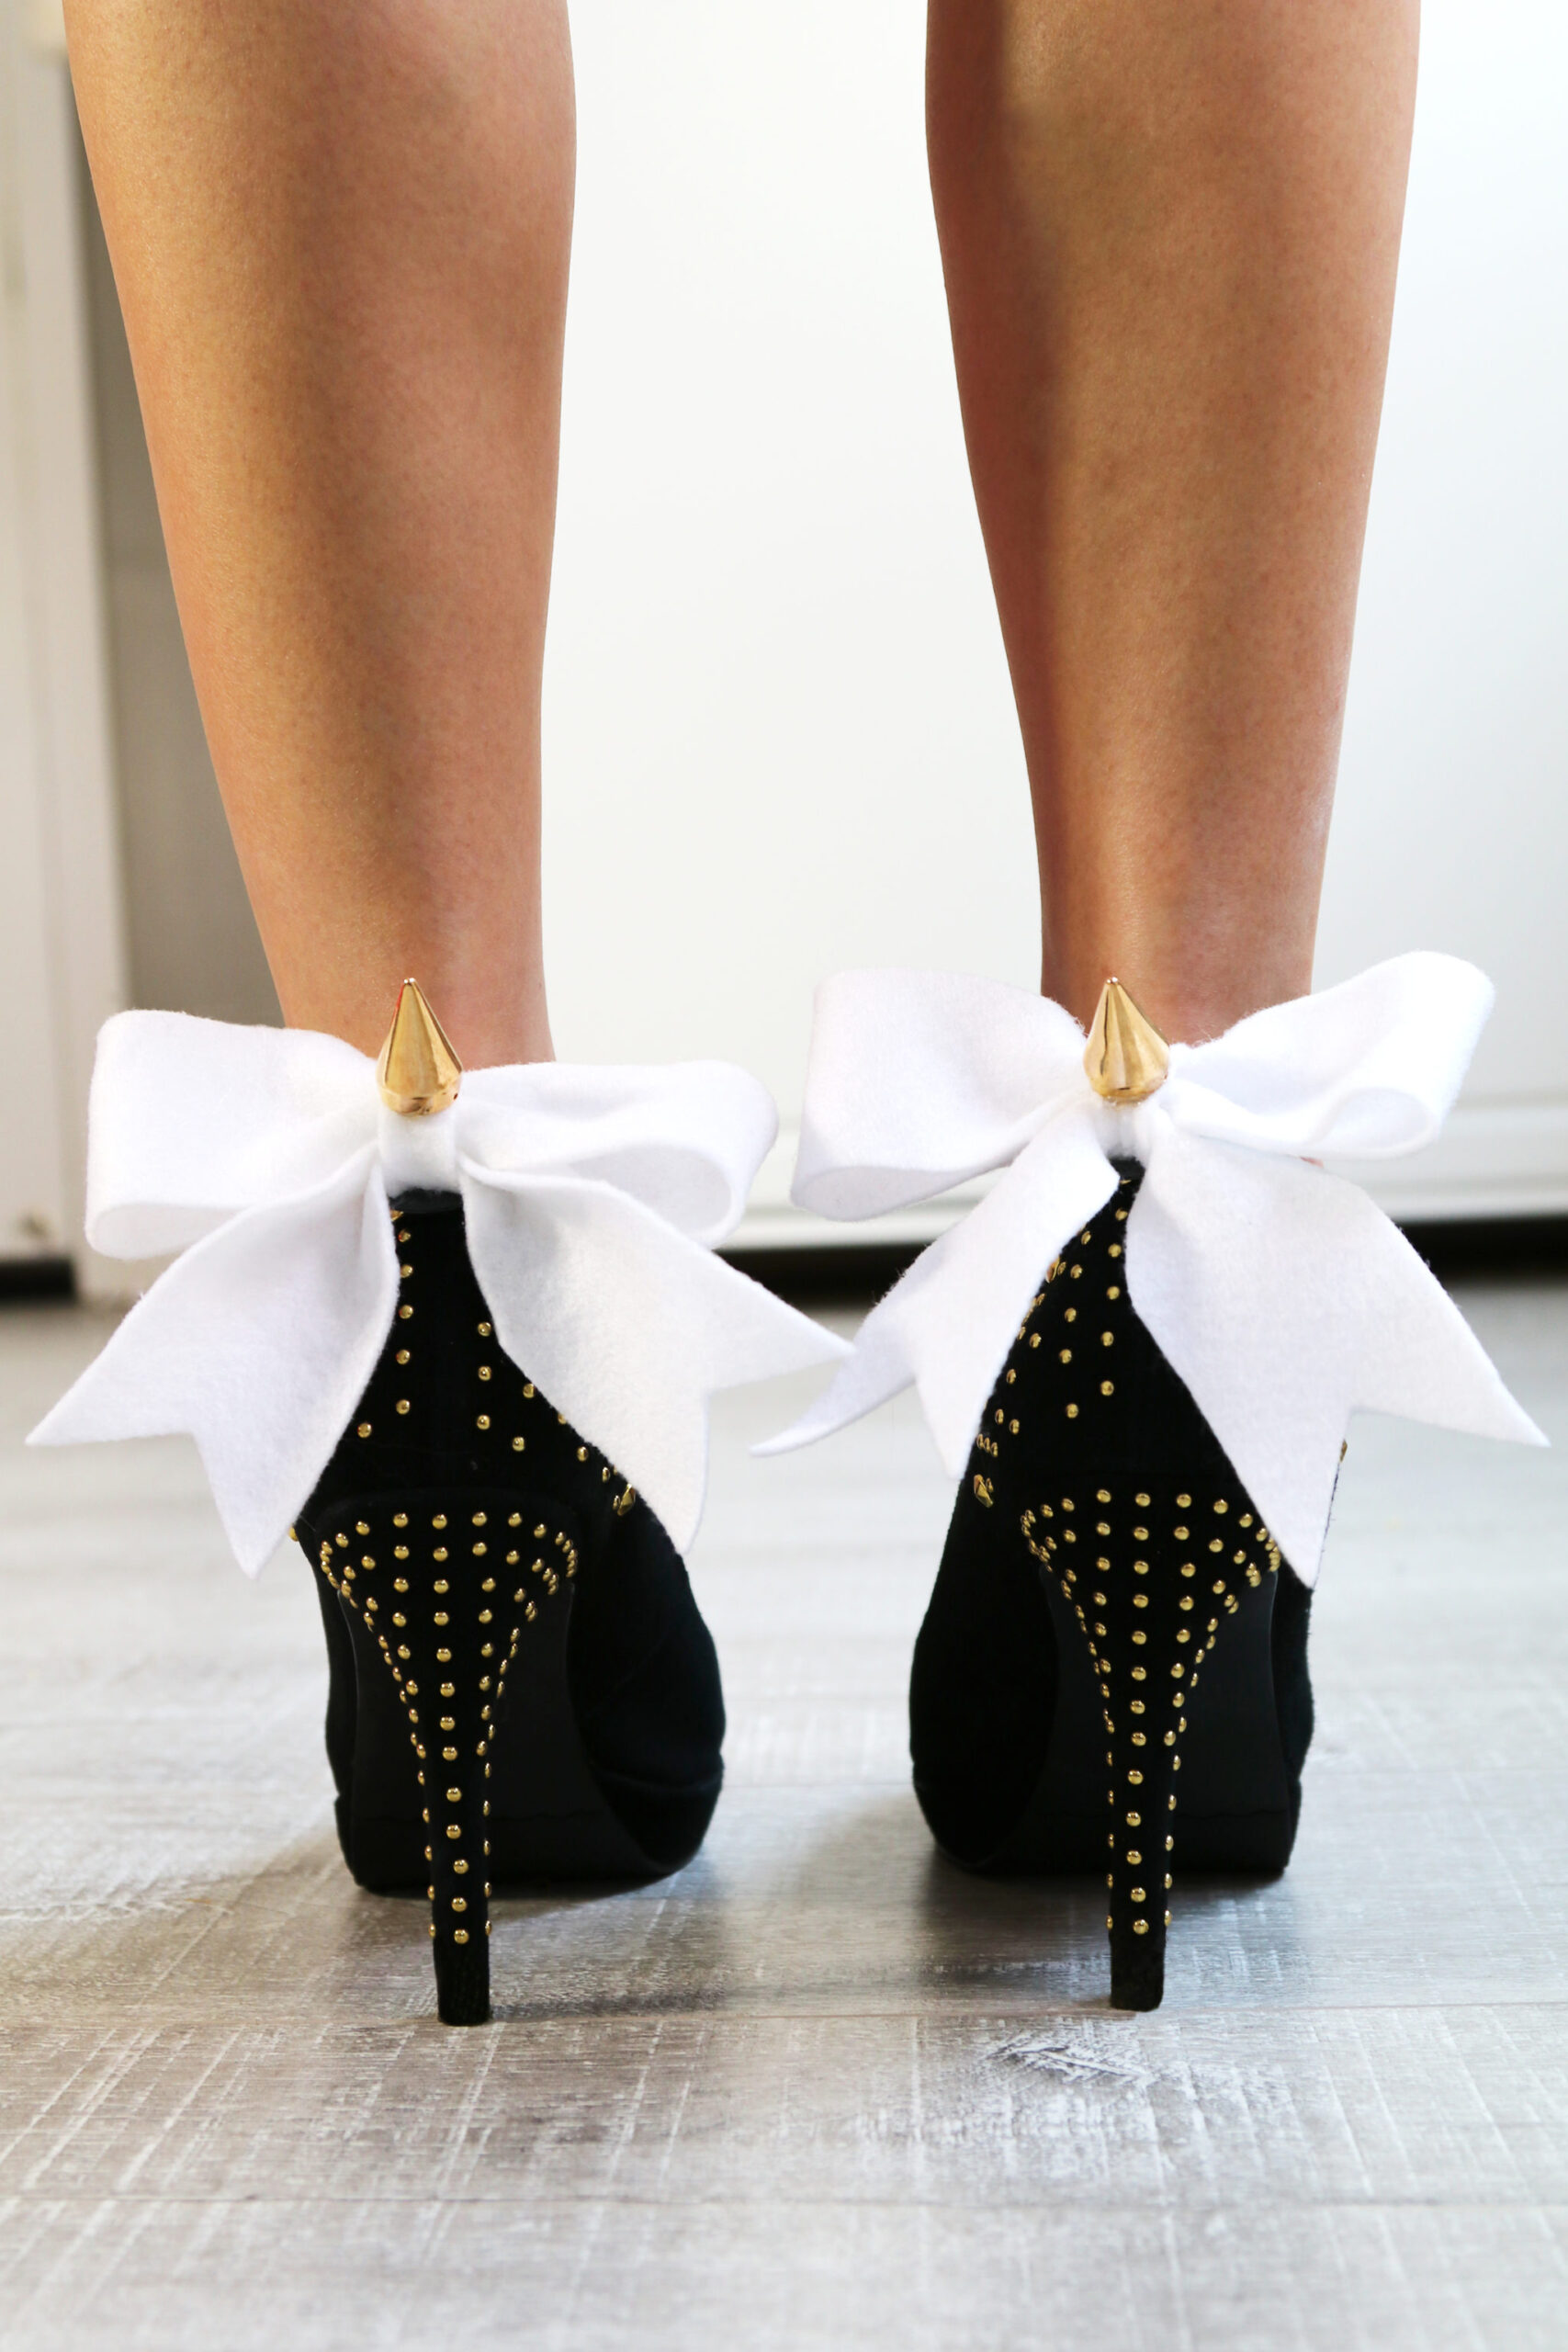 5 DIY Shoe Clips for Prom or Weddings - HGTV Handmade 